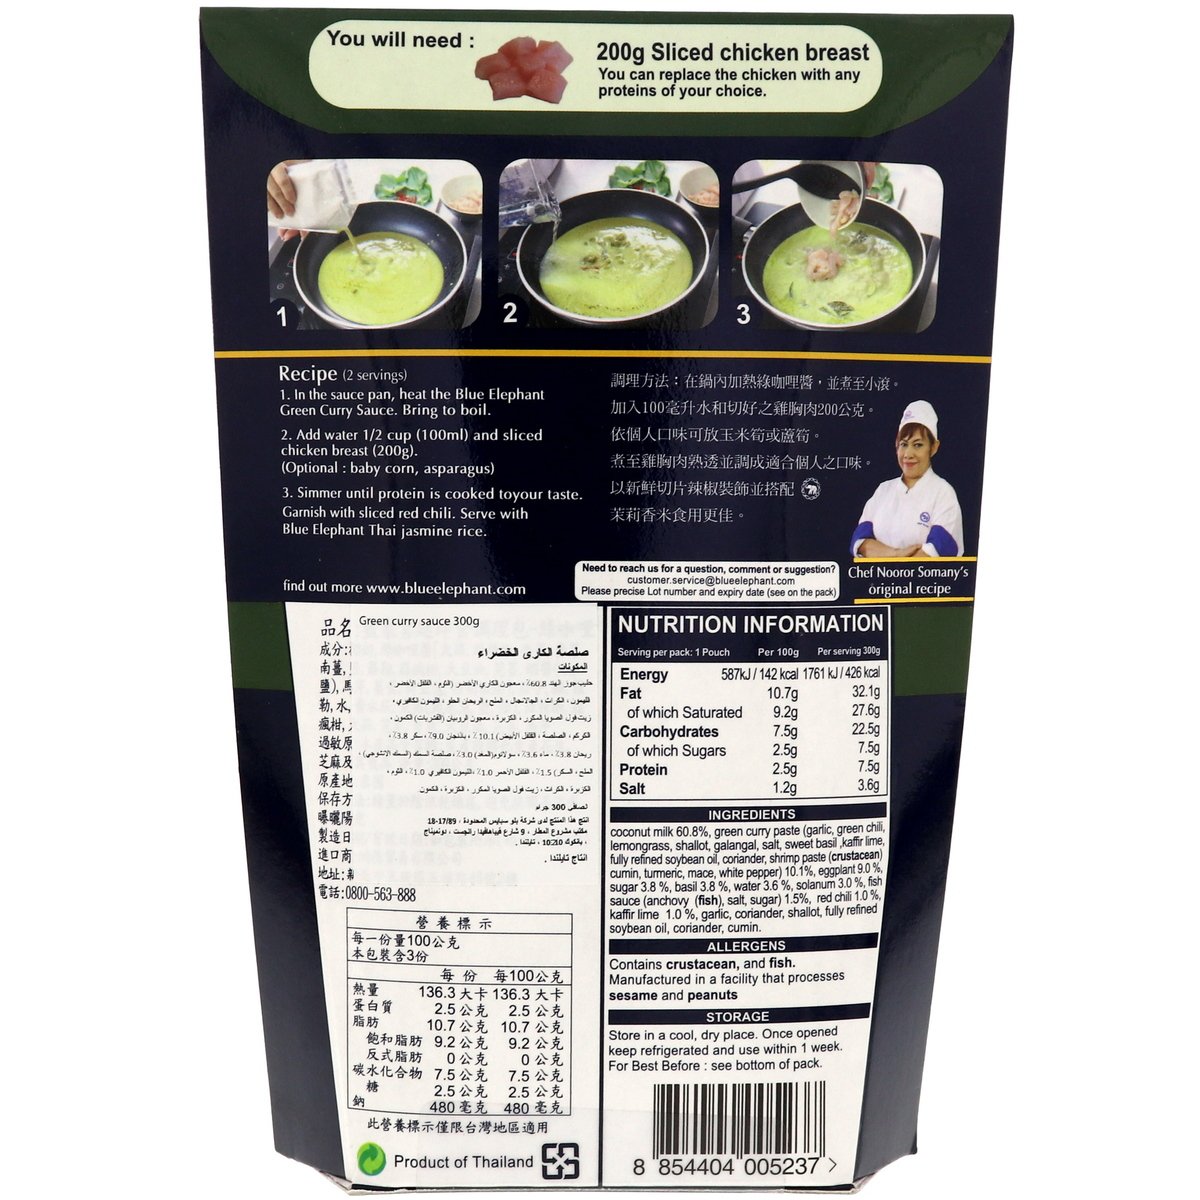 Blue Elephant Thai Premium Green Curry Sauce 300 g